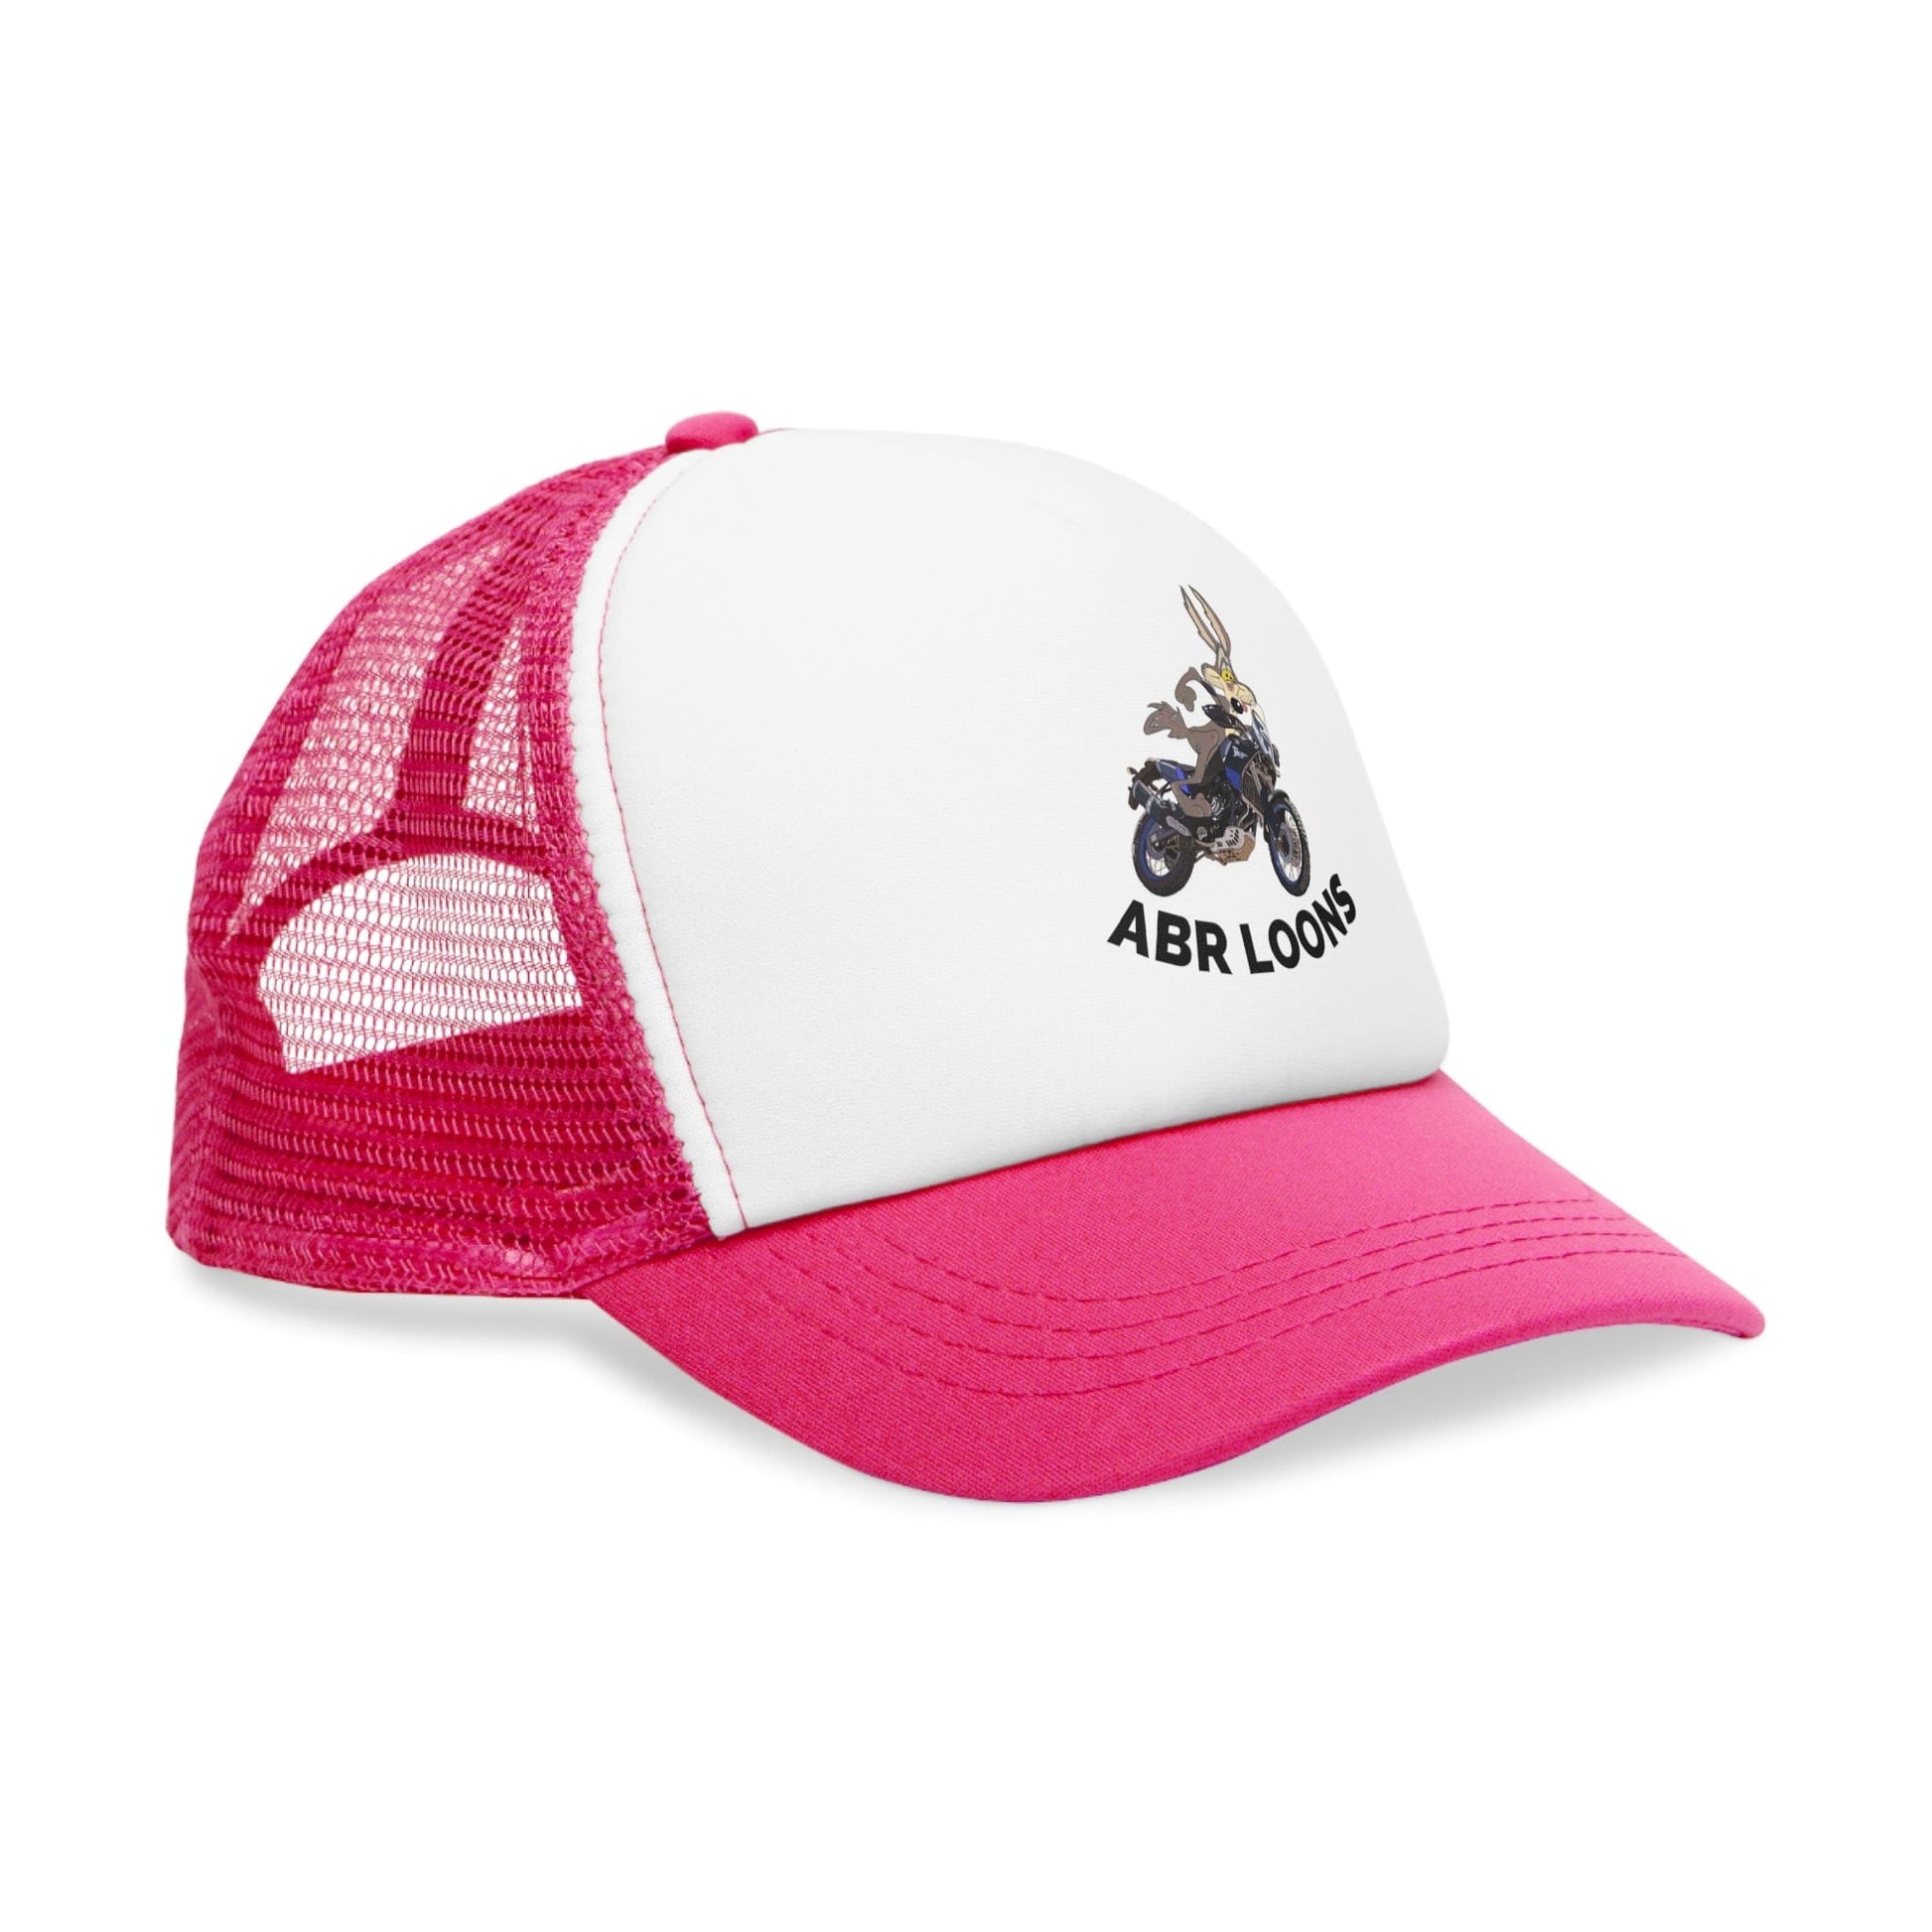 TeeFEVA Hats ABR Loons | ABR Loony Logo | Mesh Cap